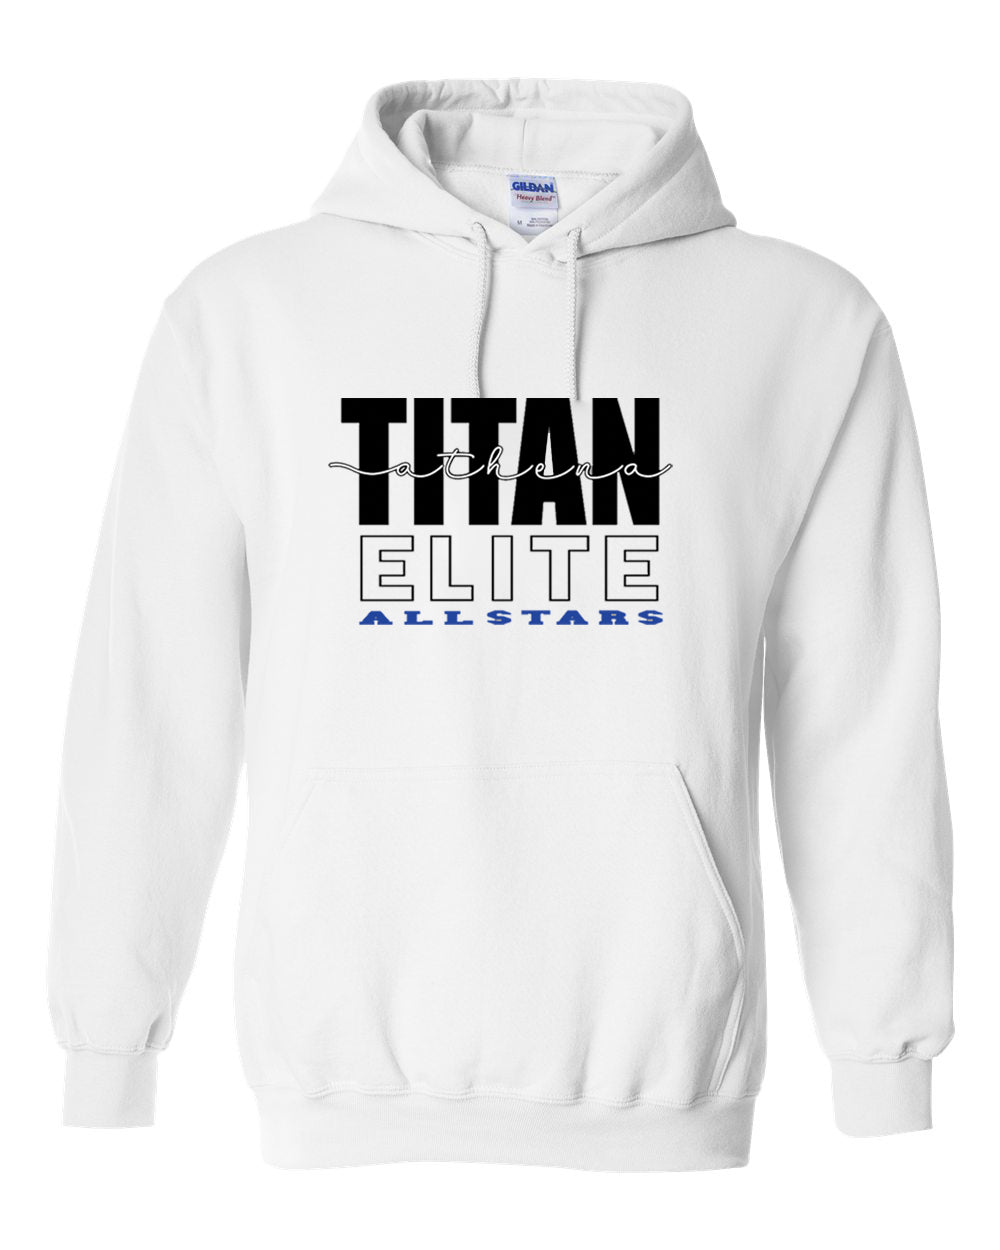 Titan Design 16 Hooded Sweatshirt